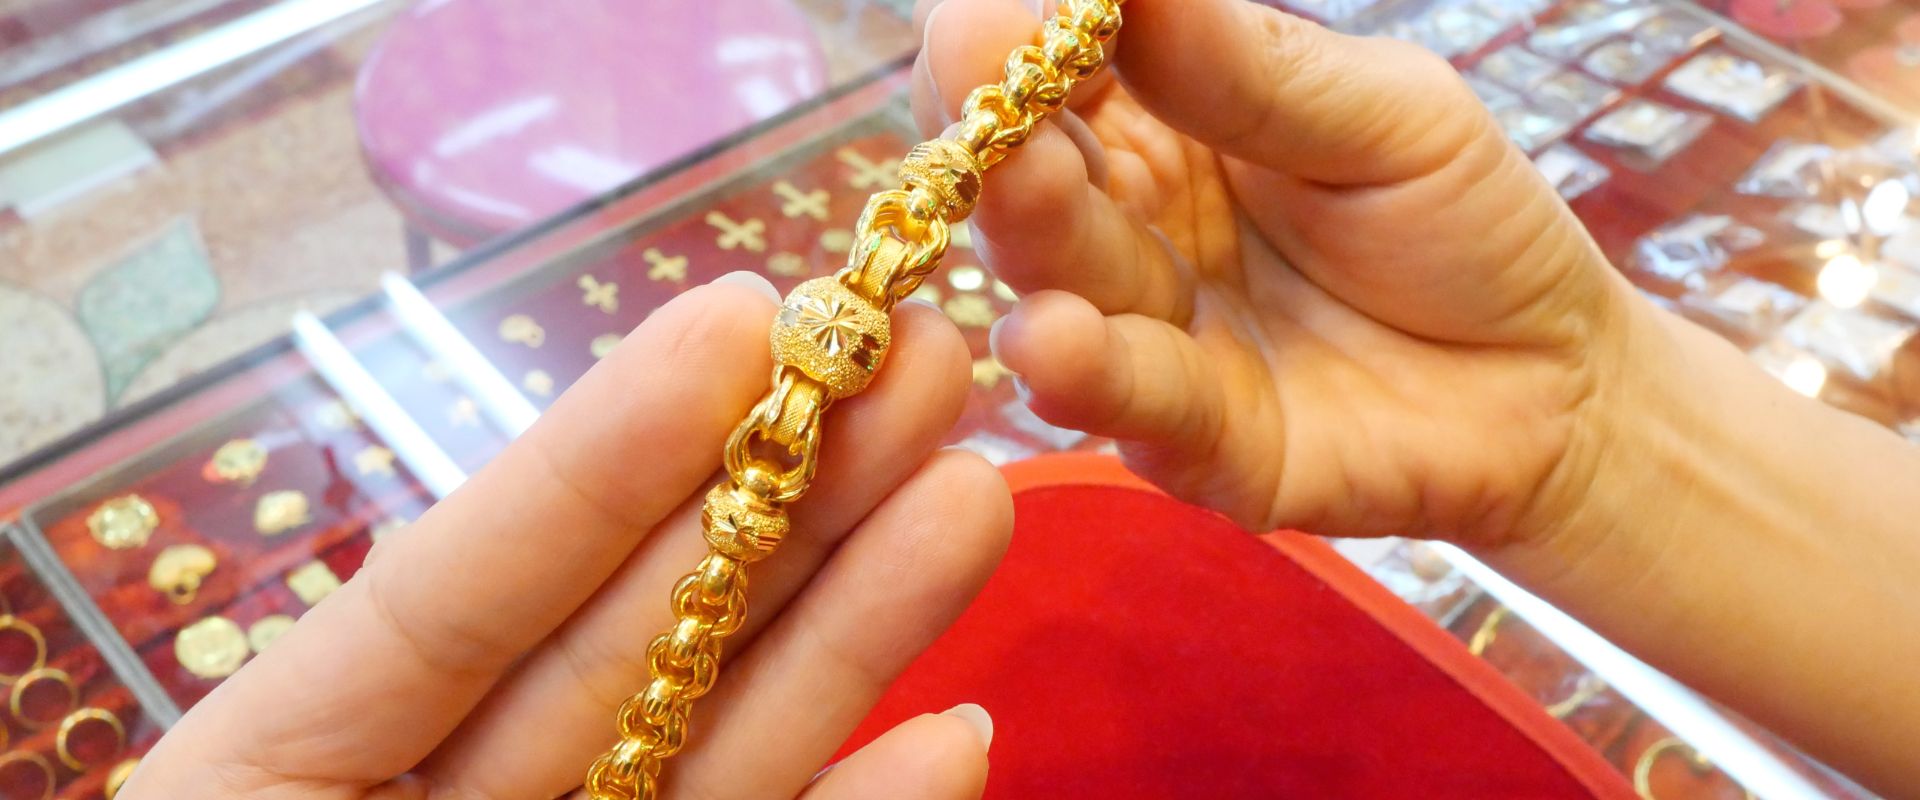 woman selling gold bracelet at pawn shop